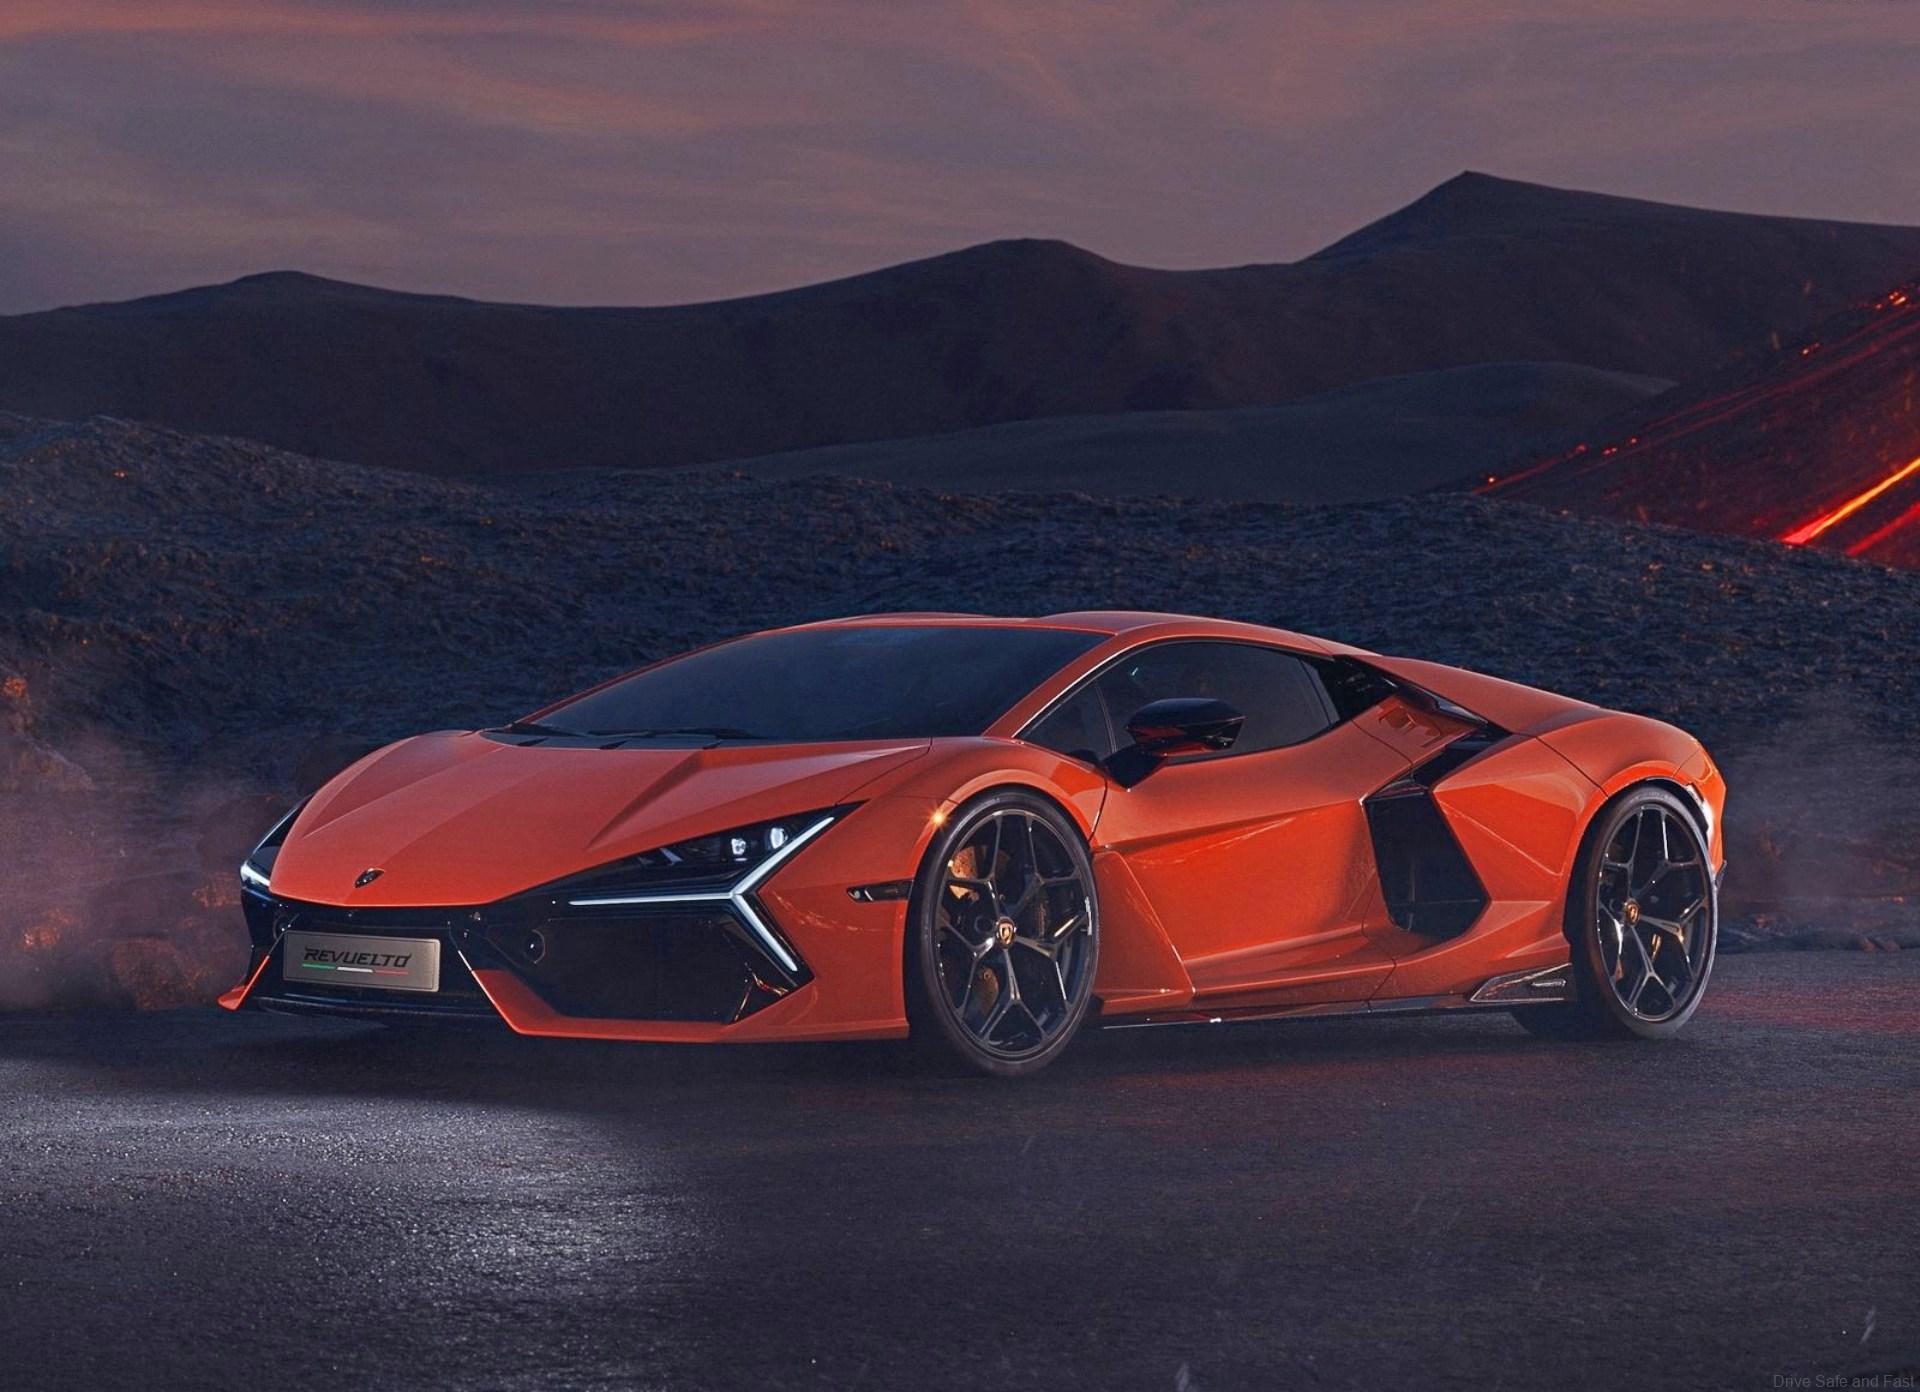 Lamborghini sells out combustion engine models, WELT reports